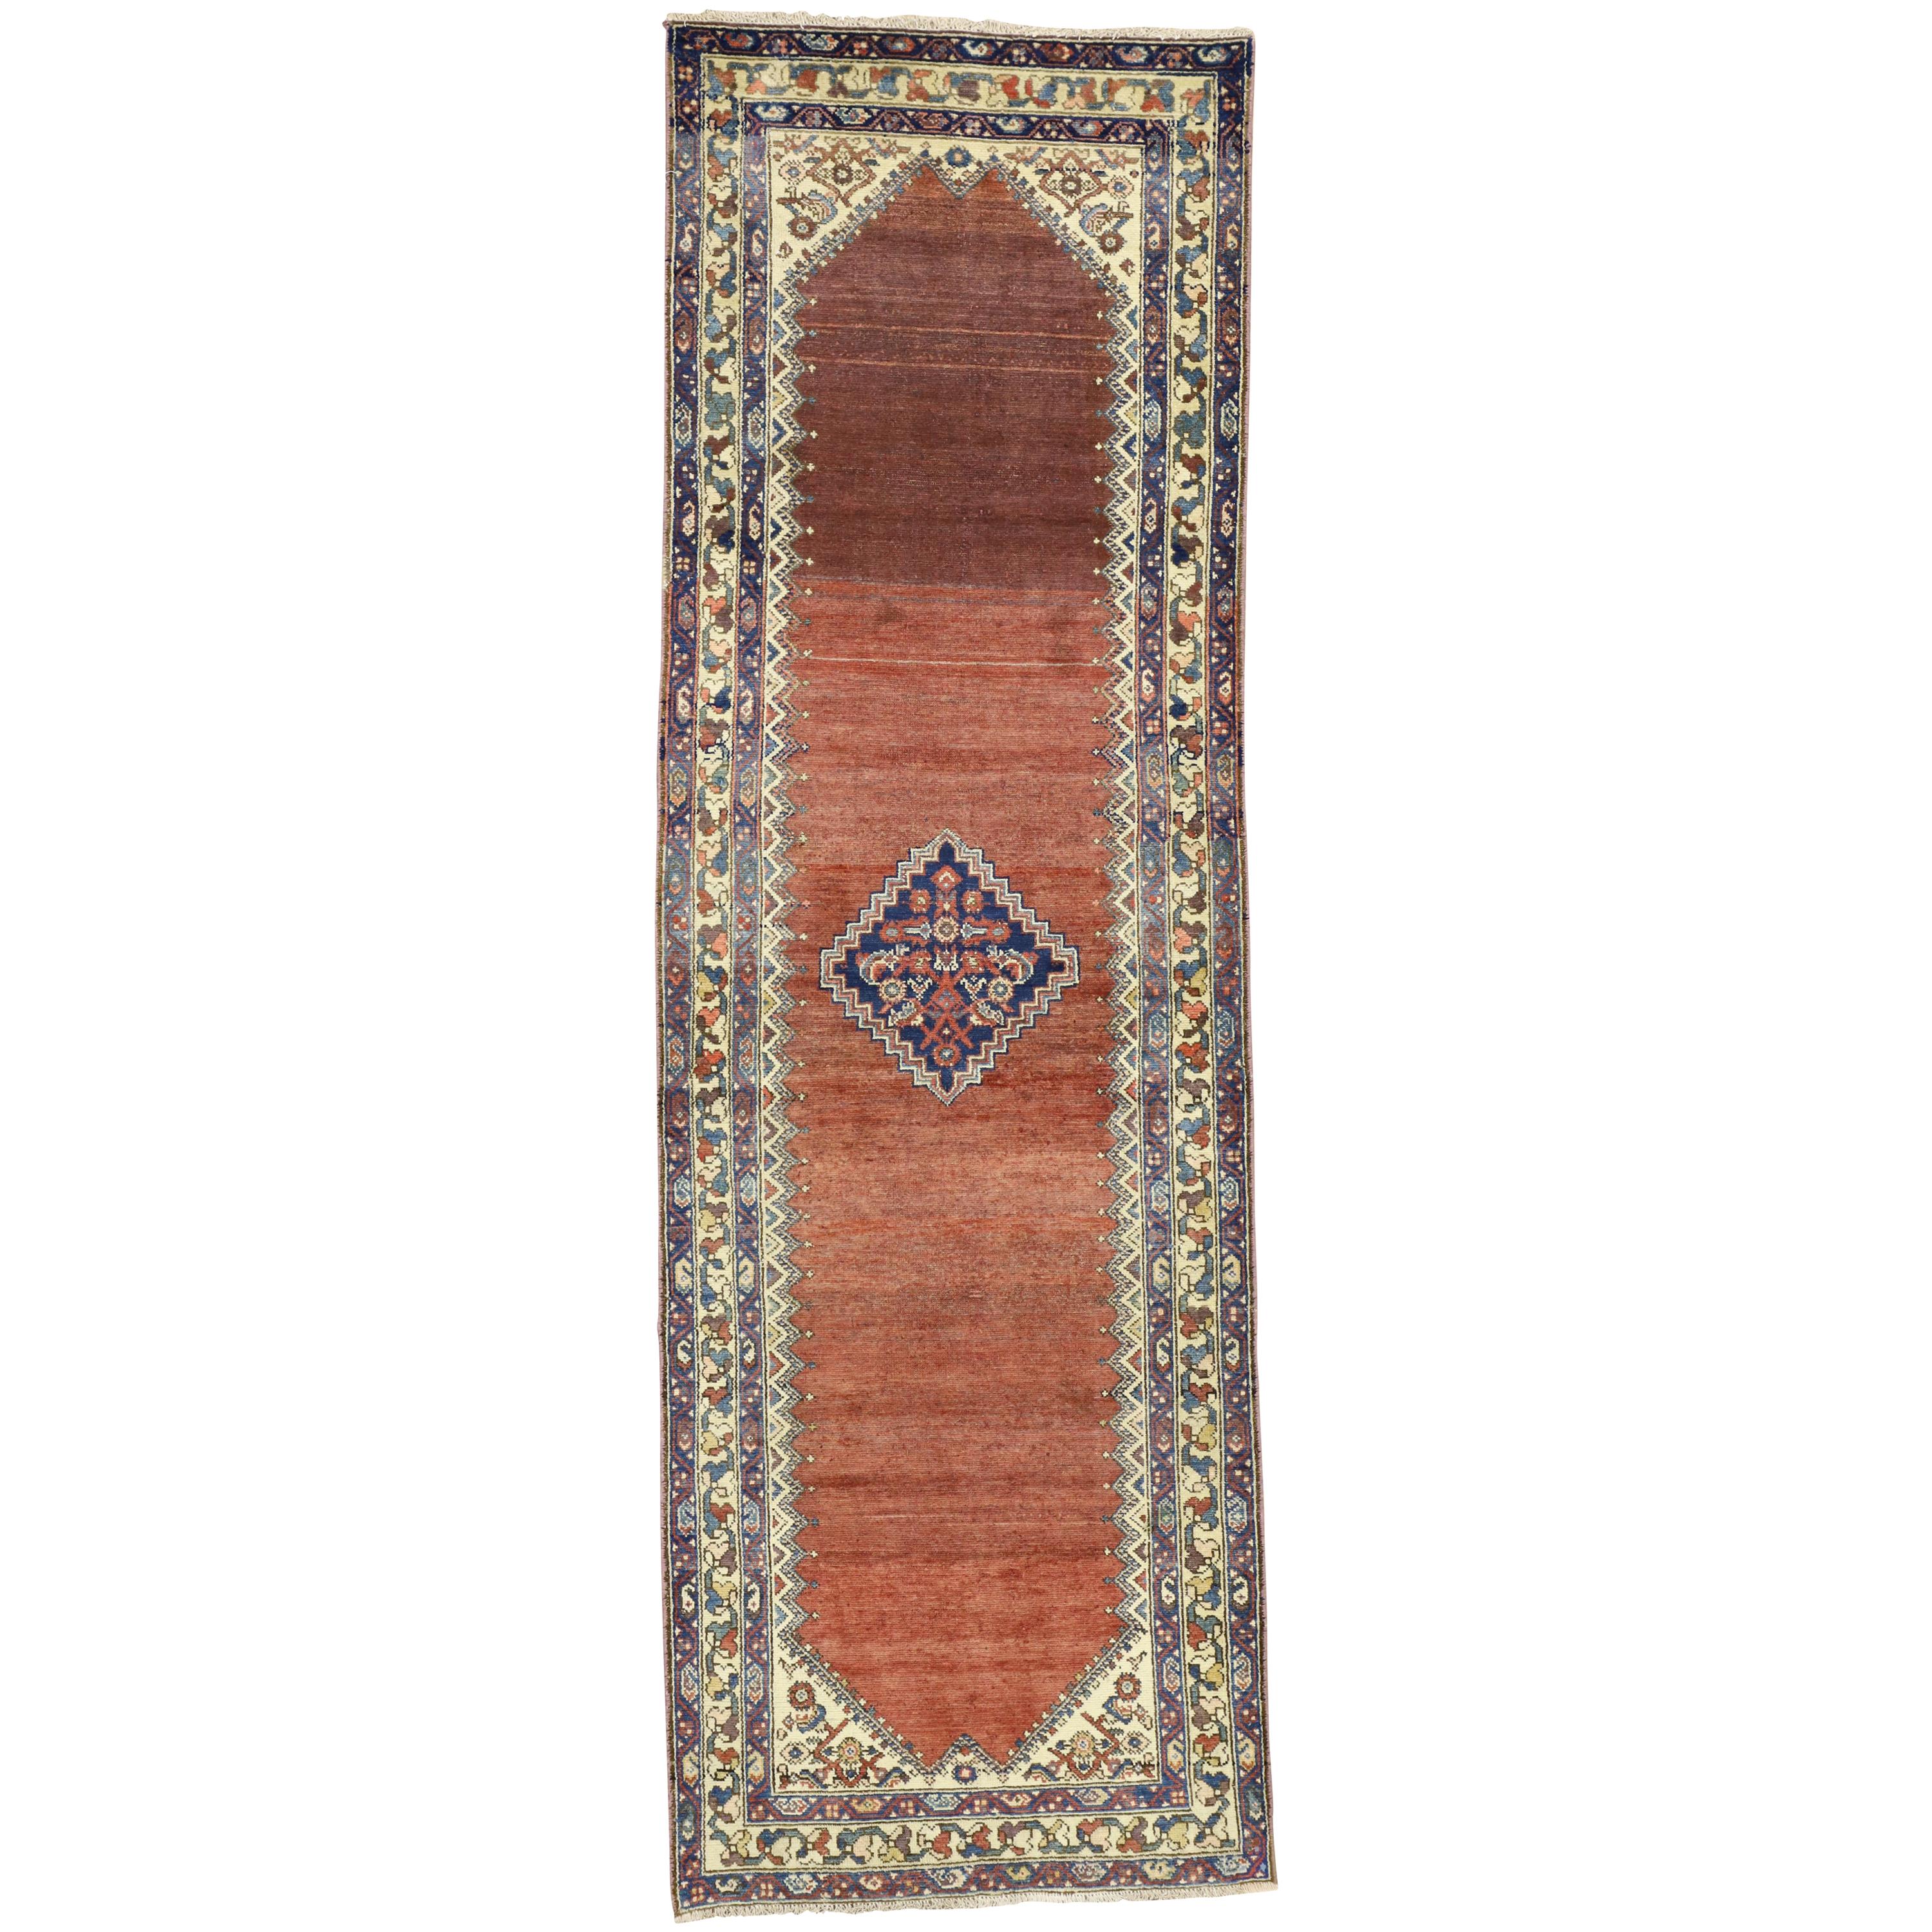 Tapis de couloir persan ancien Malayer, tapis de couloir de salon